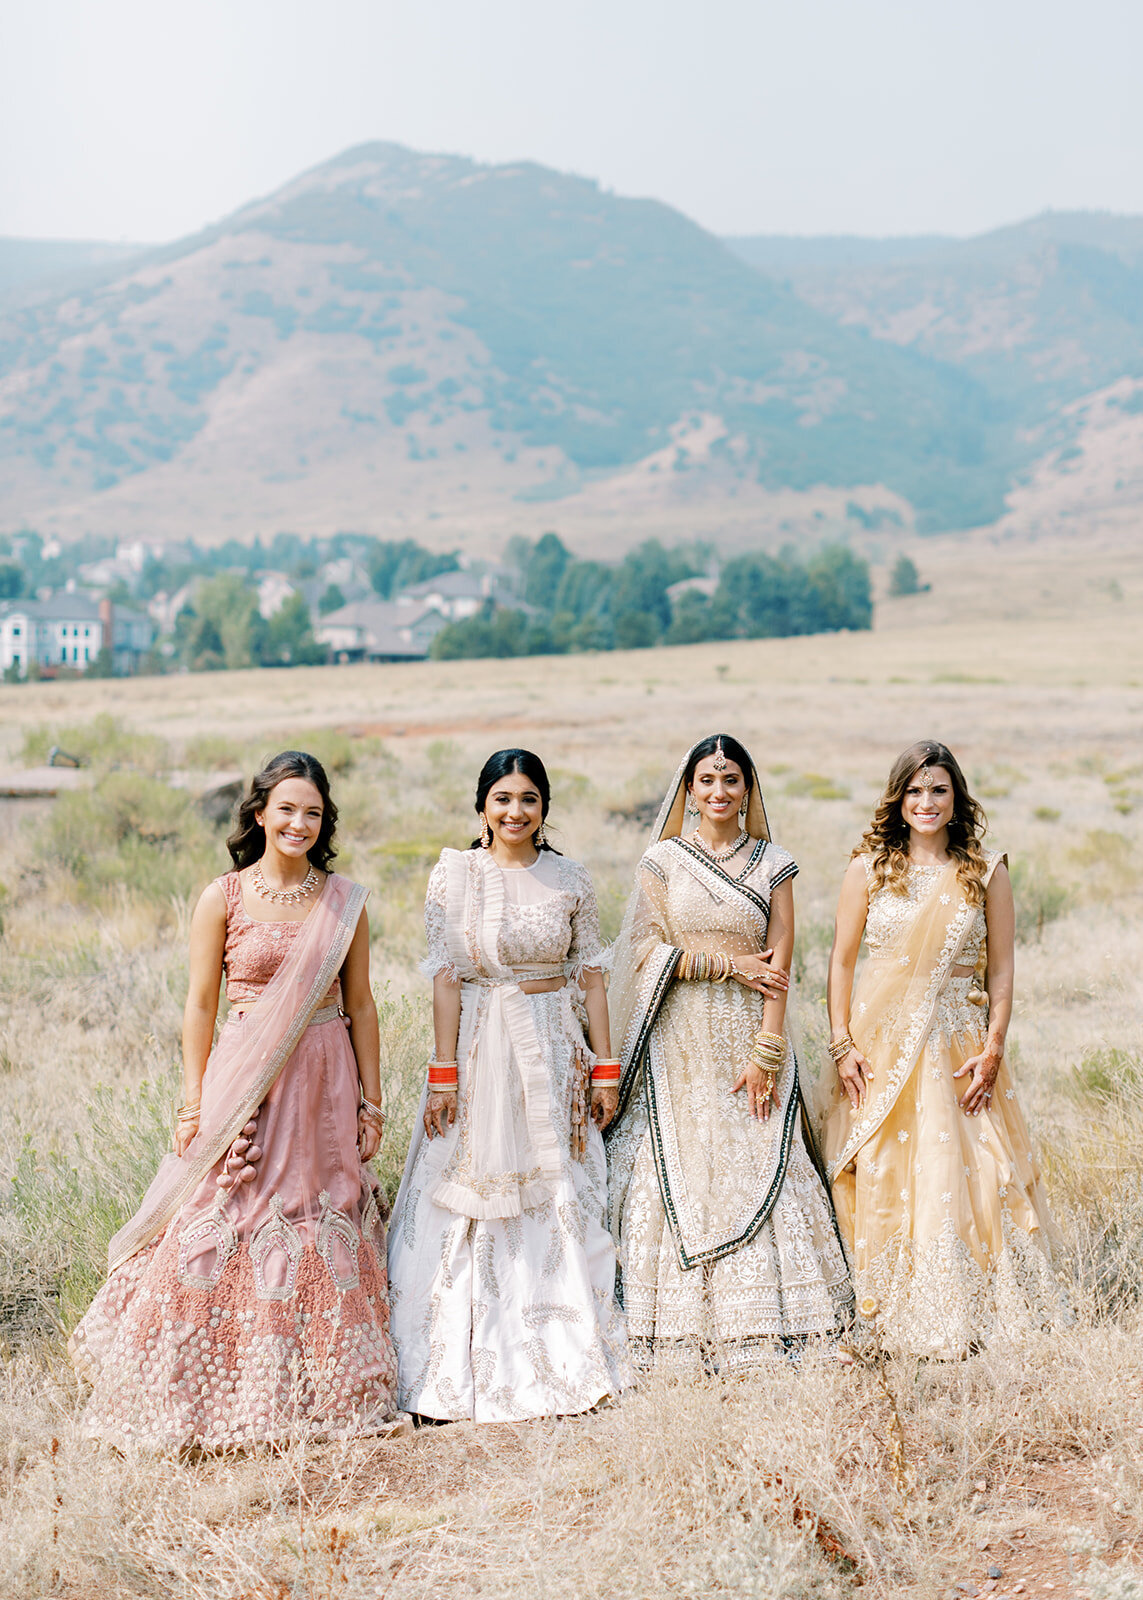 Bridal party at a South Asian Fusion wedding in Colorado with mountain backdrop